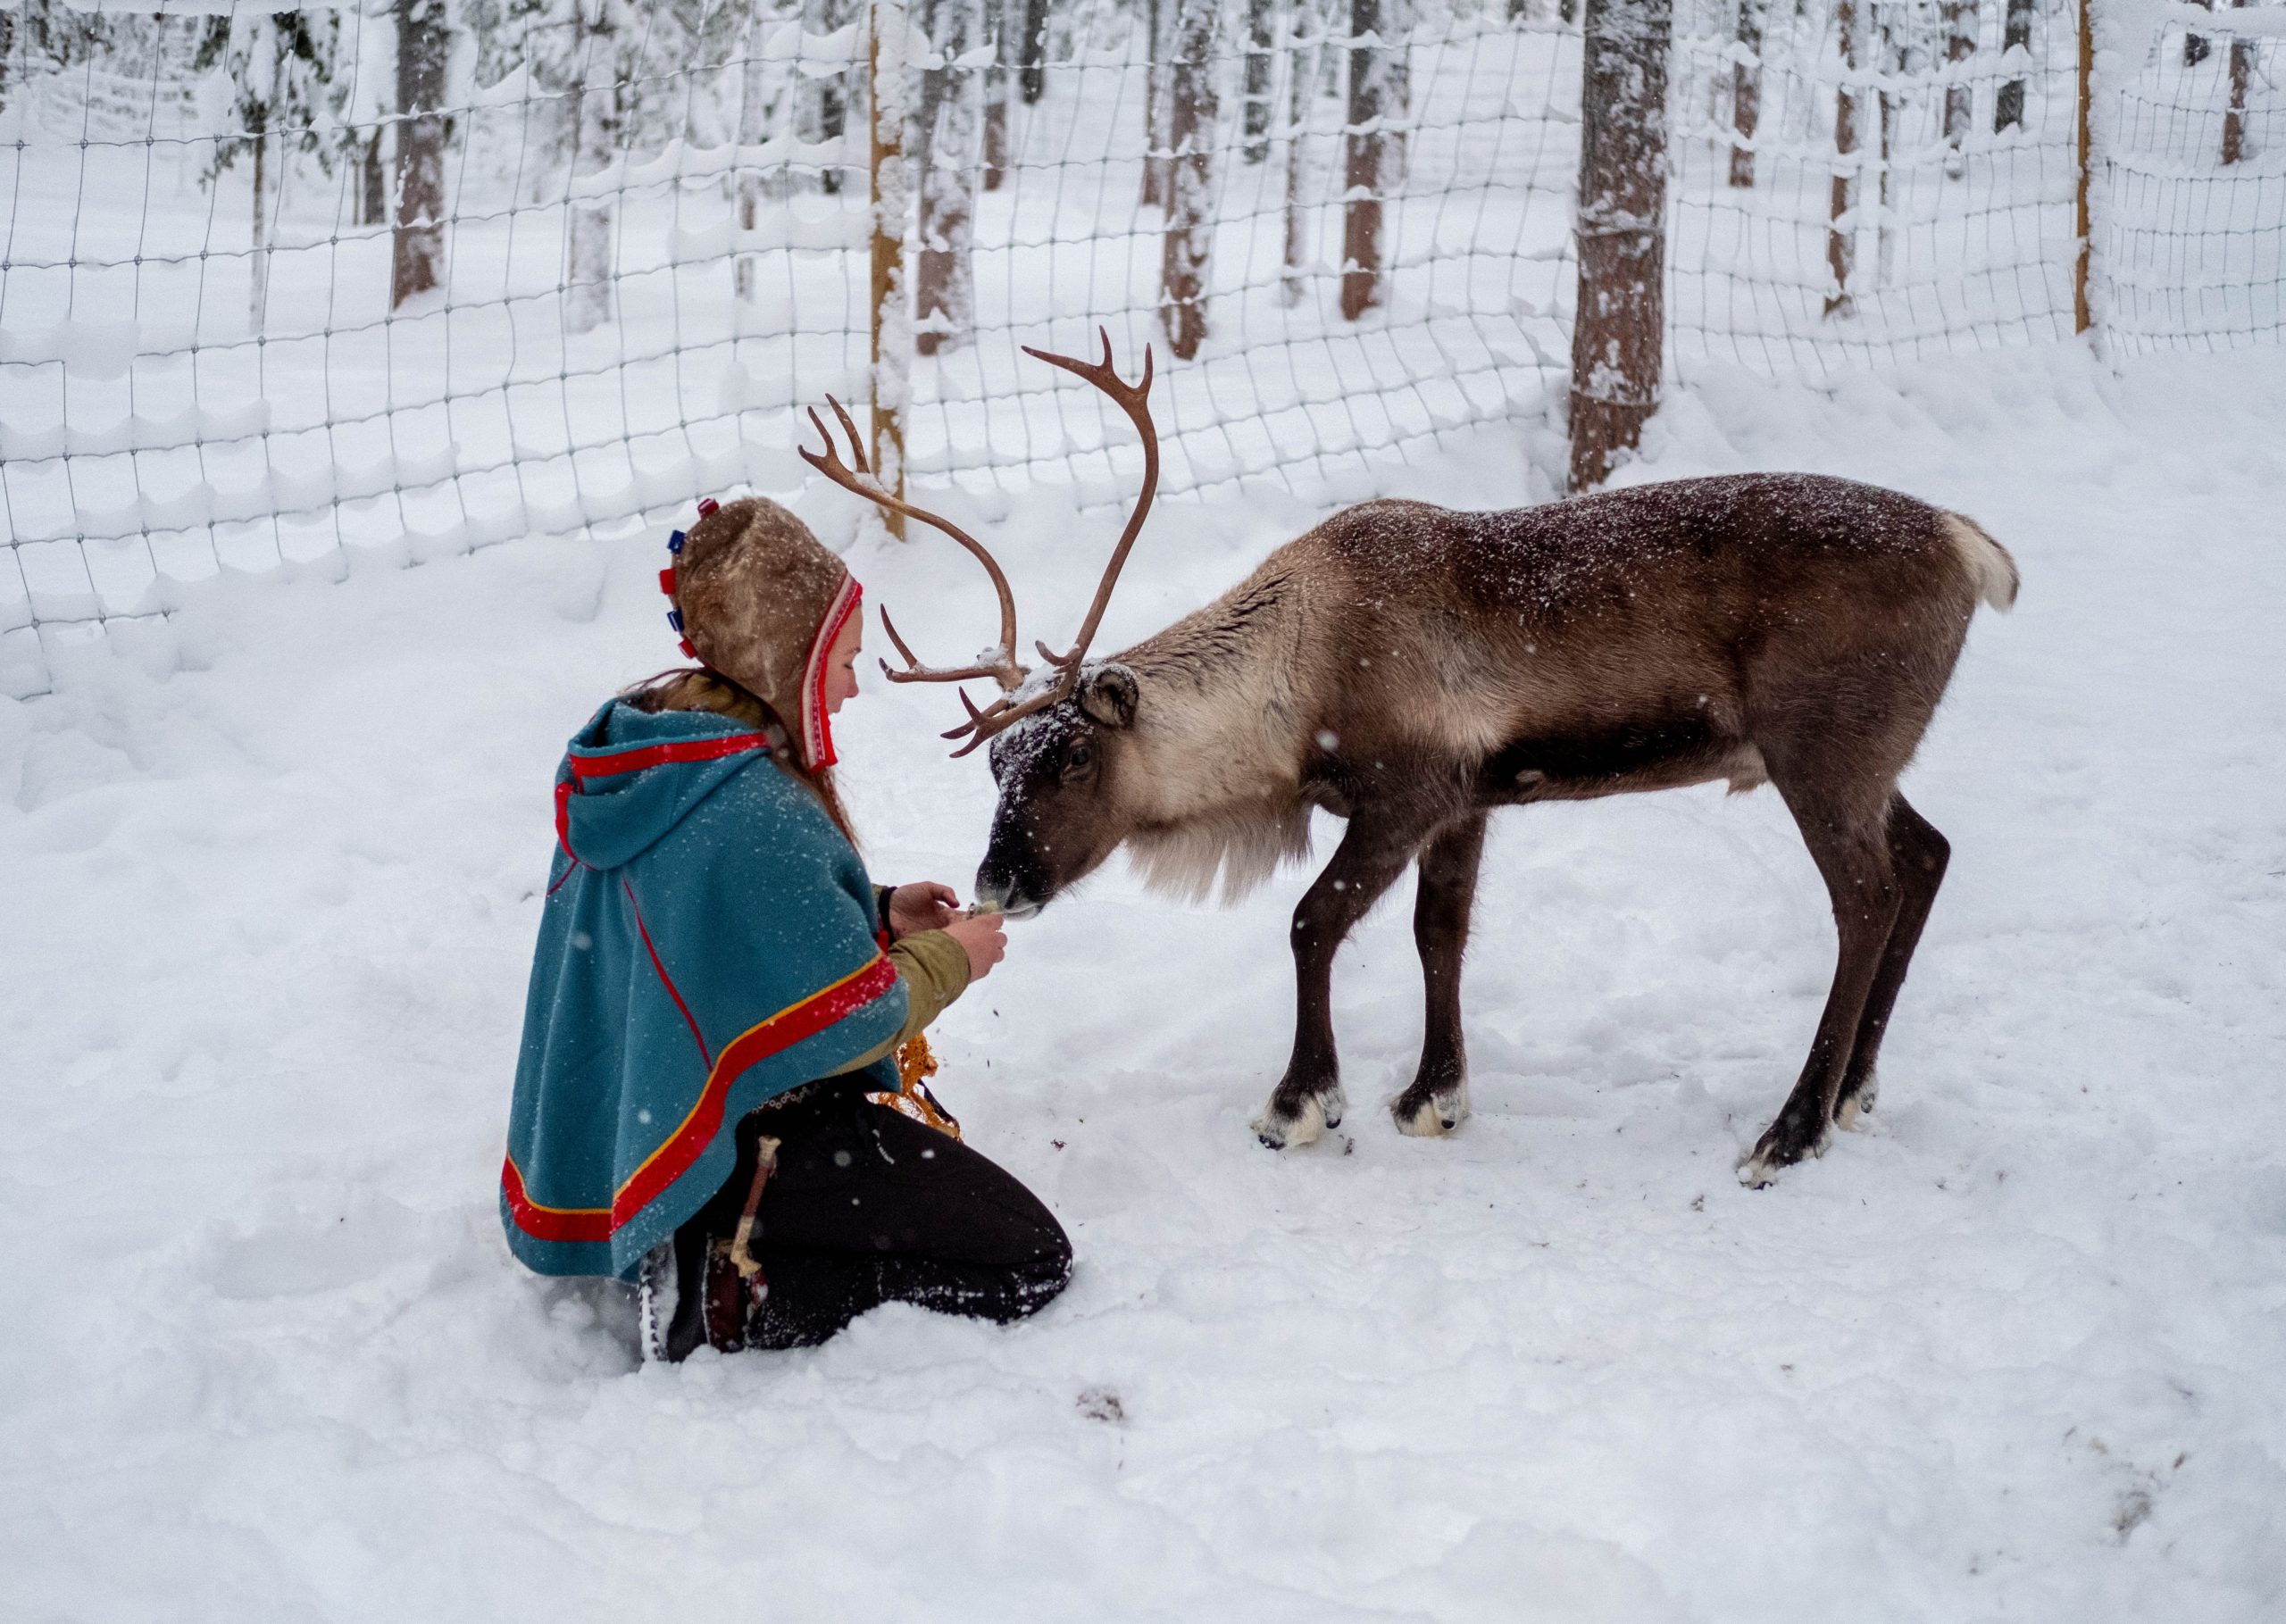 Girl and Reindeer